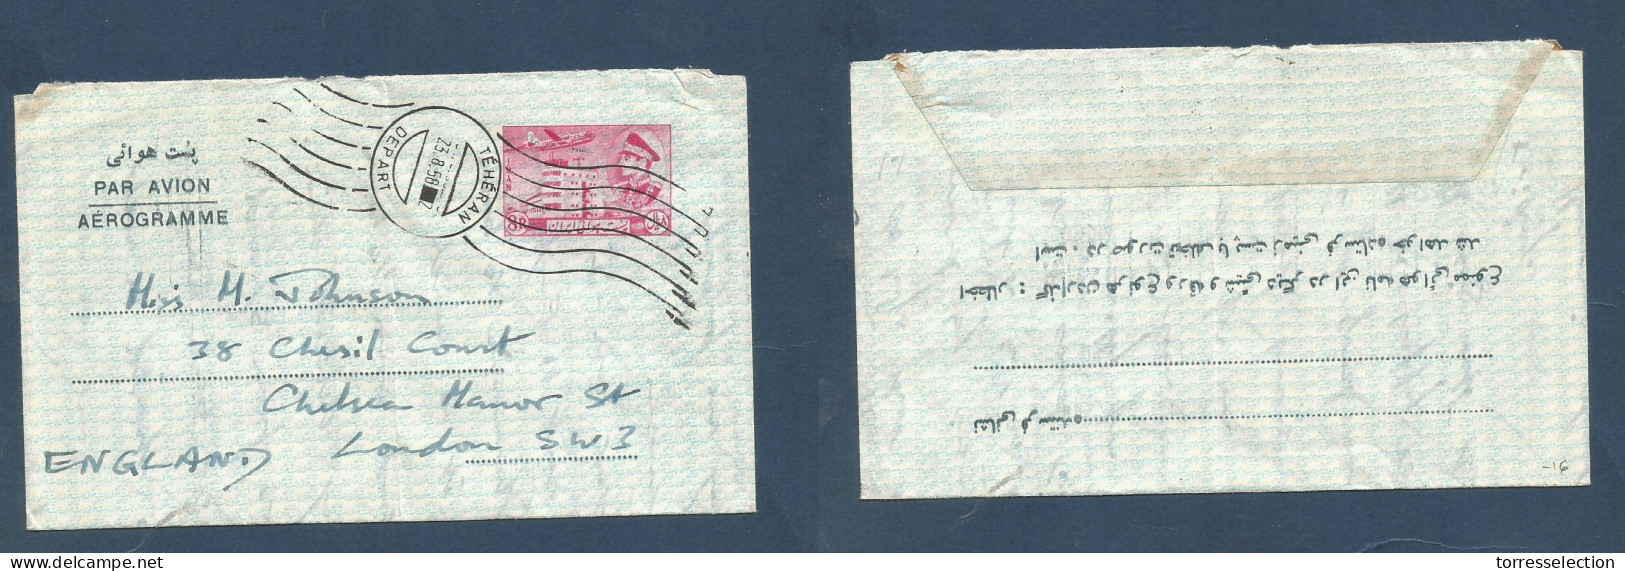 PERSIA. 1958 (23 Aug) Teheran - London, UK. 8p Red Stationary Air Lettersheet, Rolling Cachet. Fine Usage. XSALE. - Iran